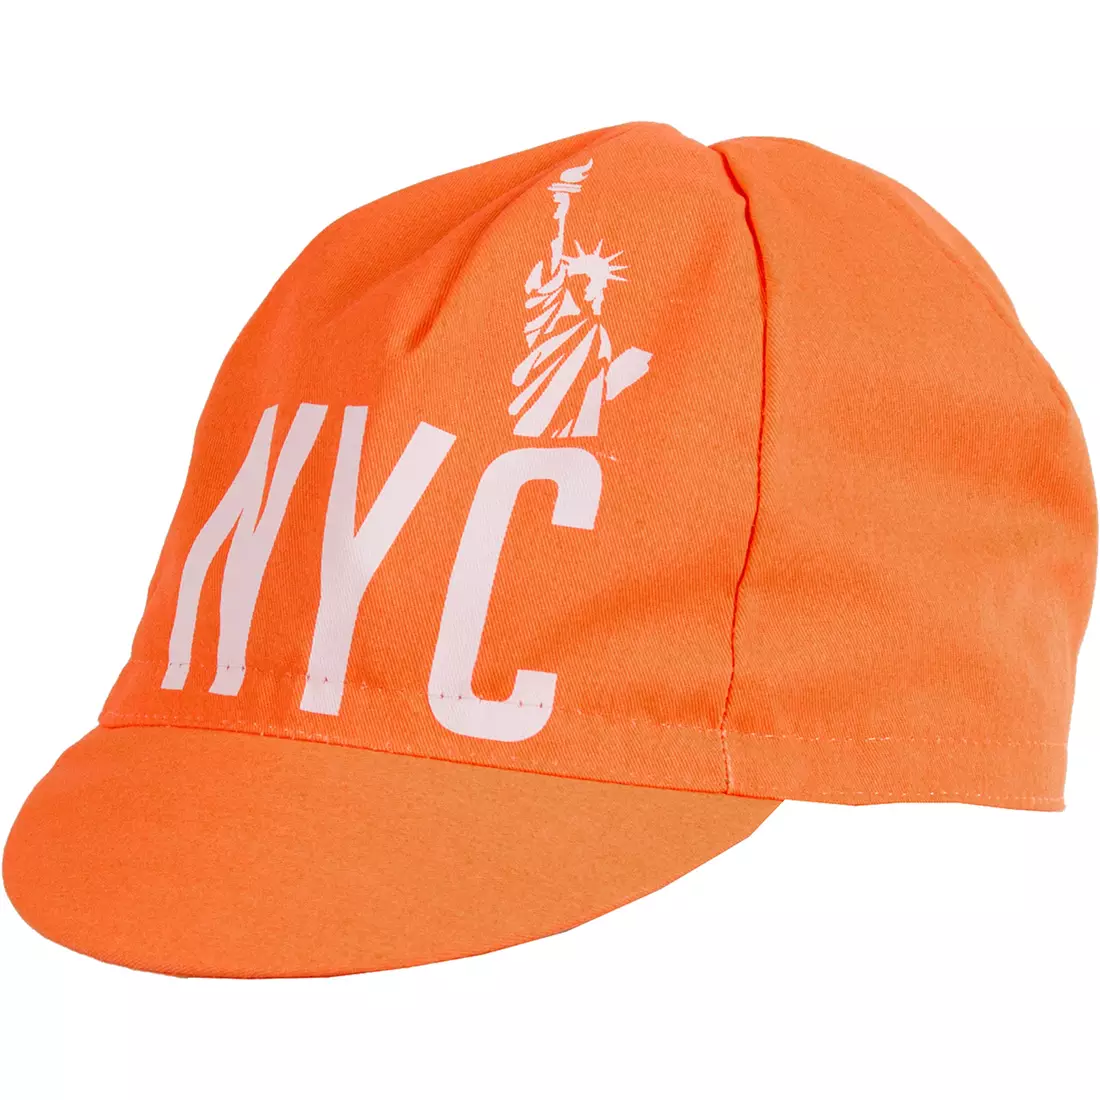 GIORDANA SS18 cycling cap - New York City Liberty - Orange GI-S3-COCA-NYCL-ORAN one size